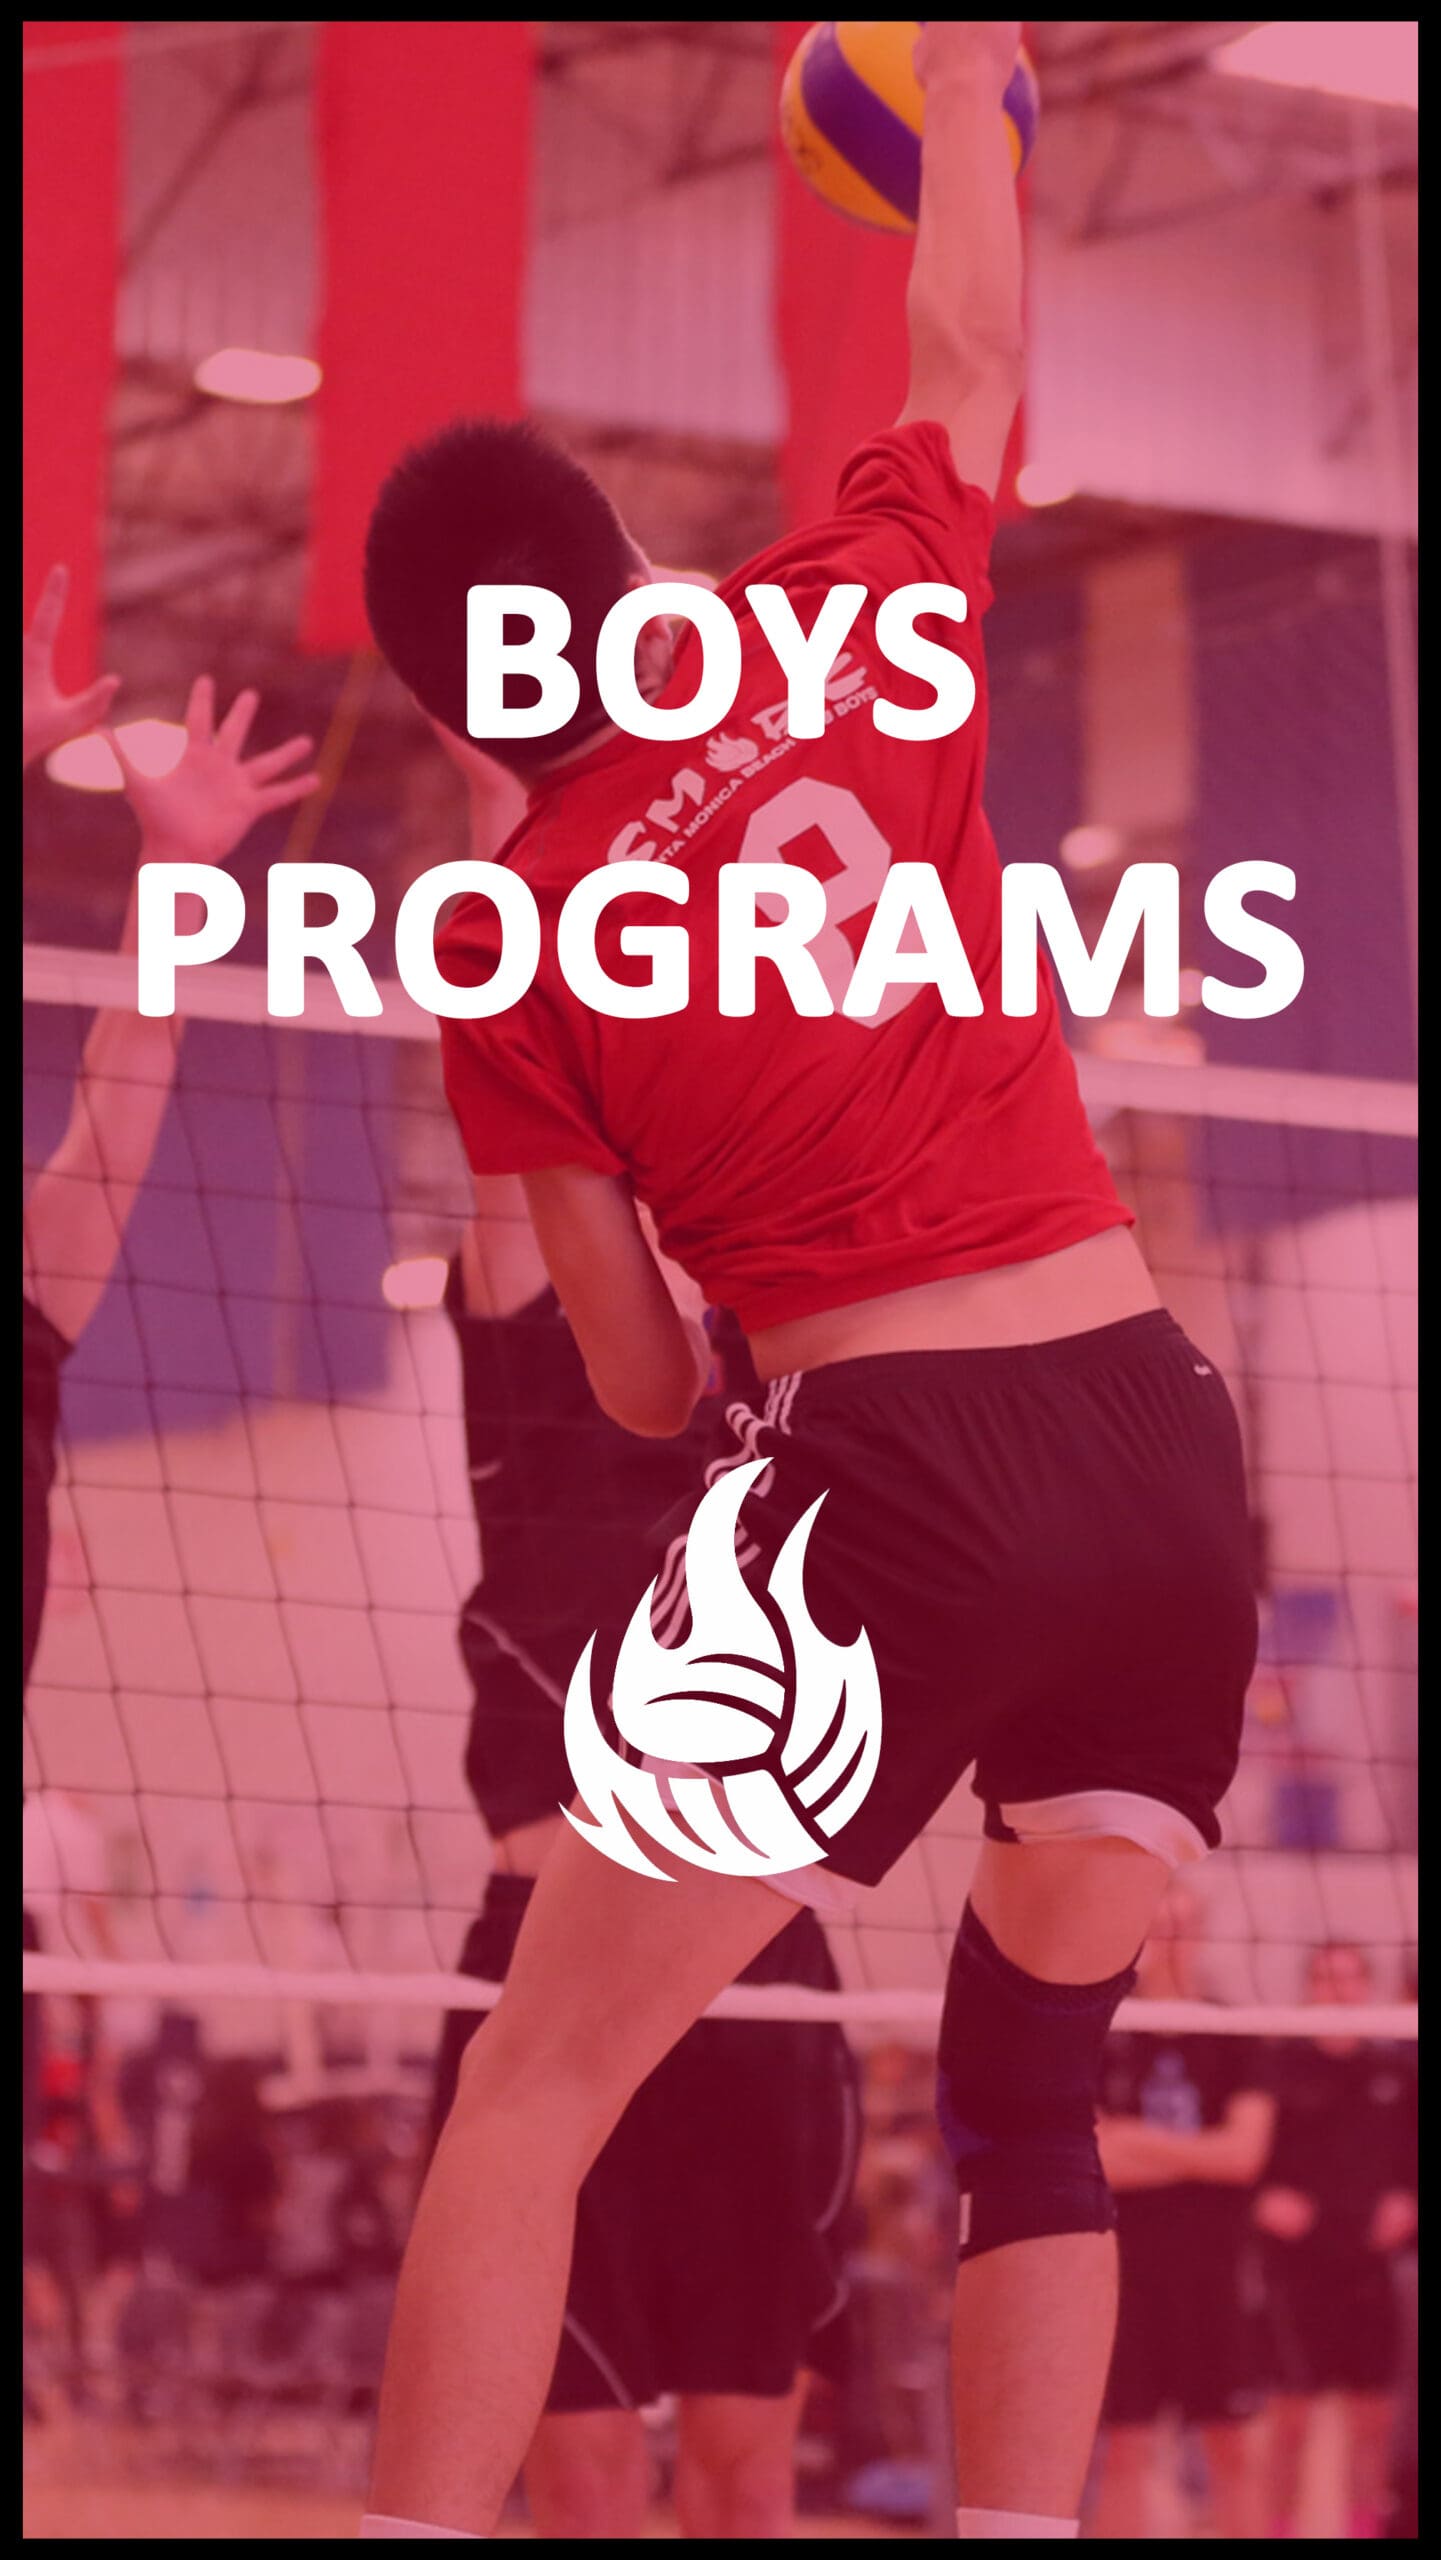 SportsEngine - Programs Page - Image Boxes Girls Boys - Boys Programs